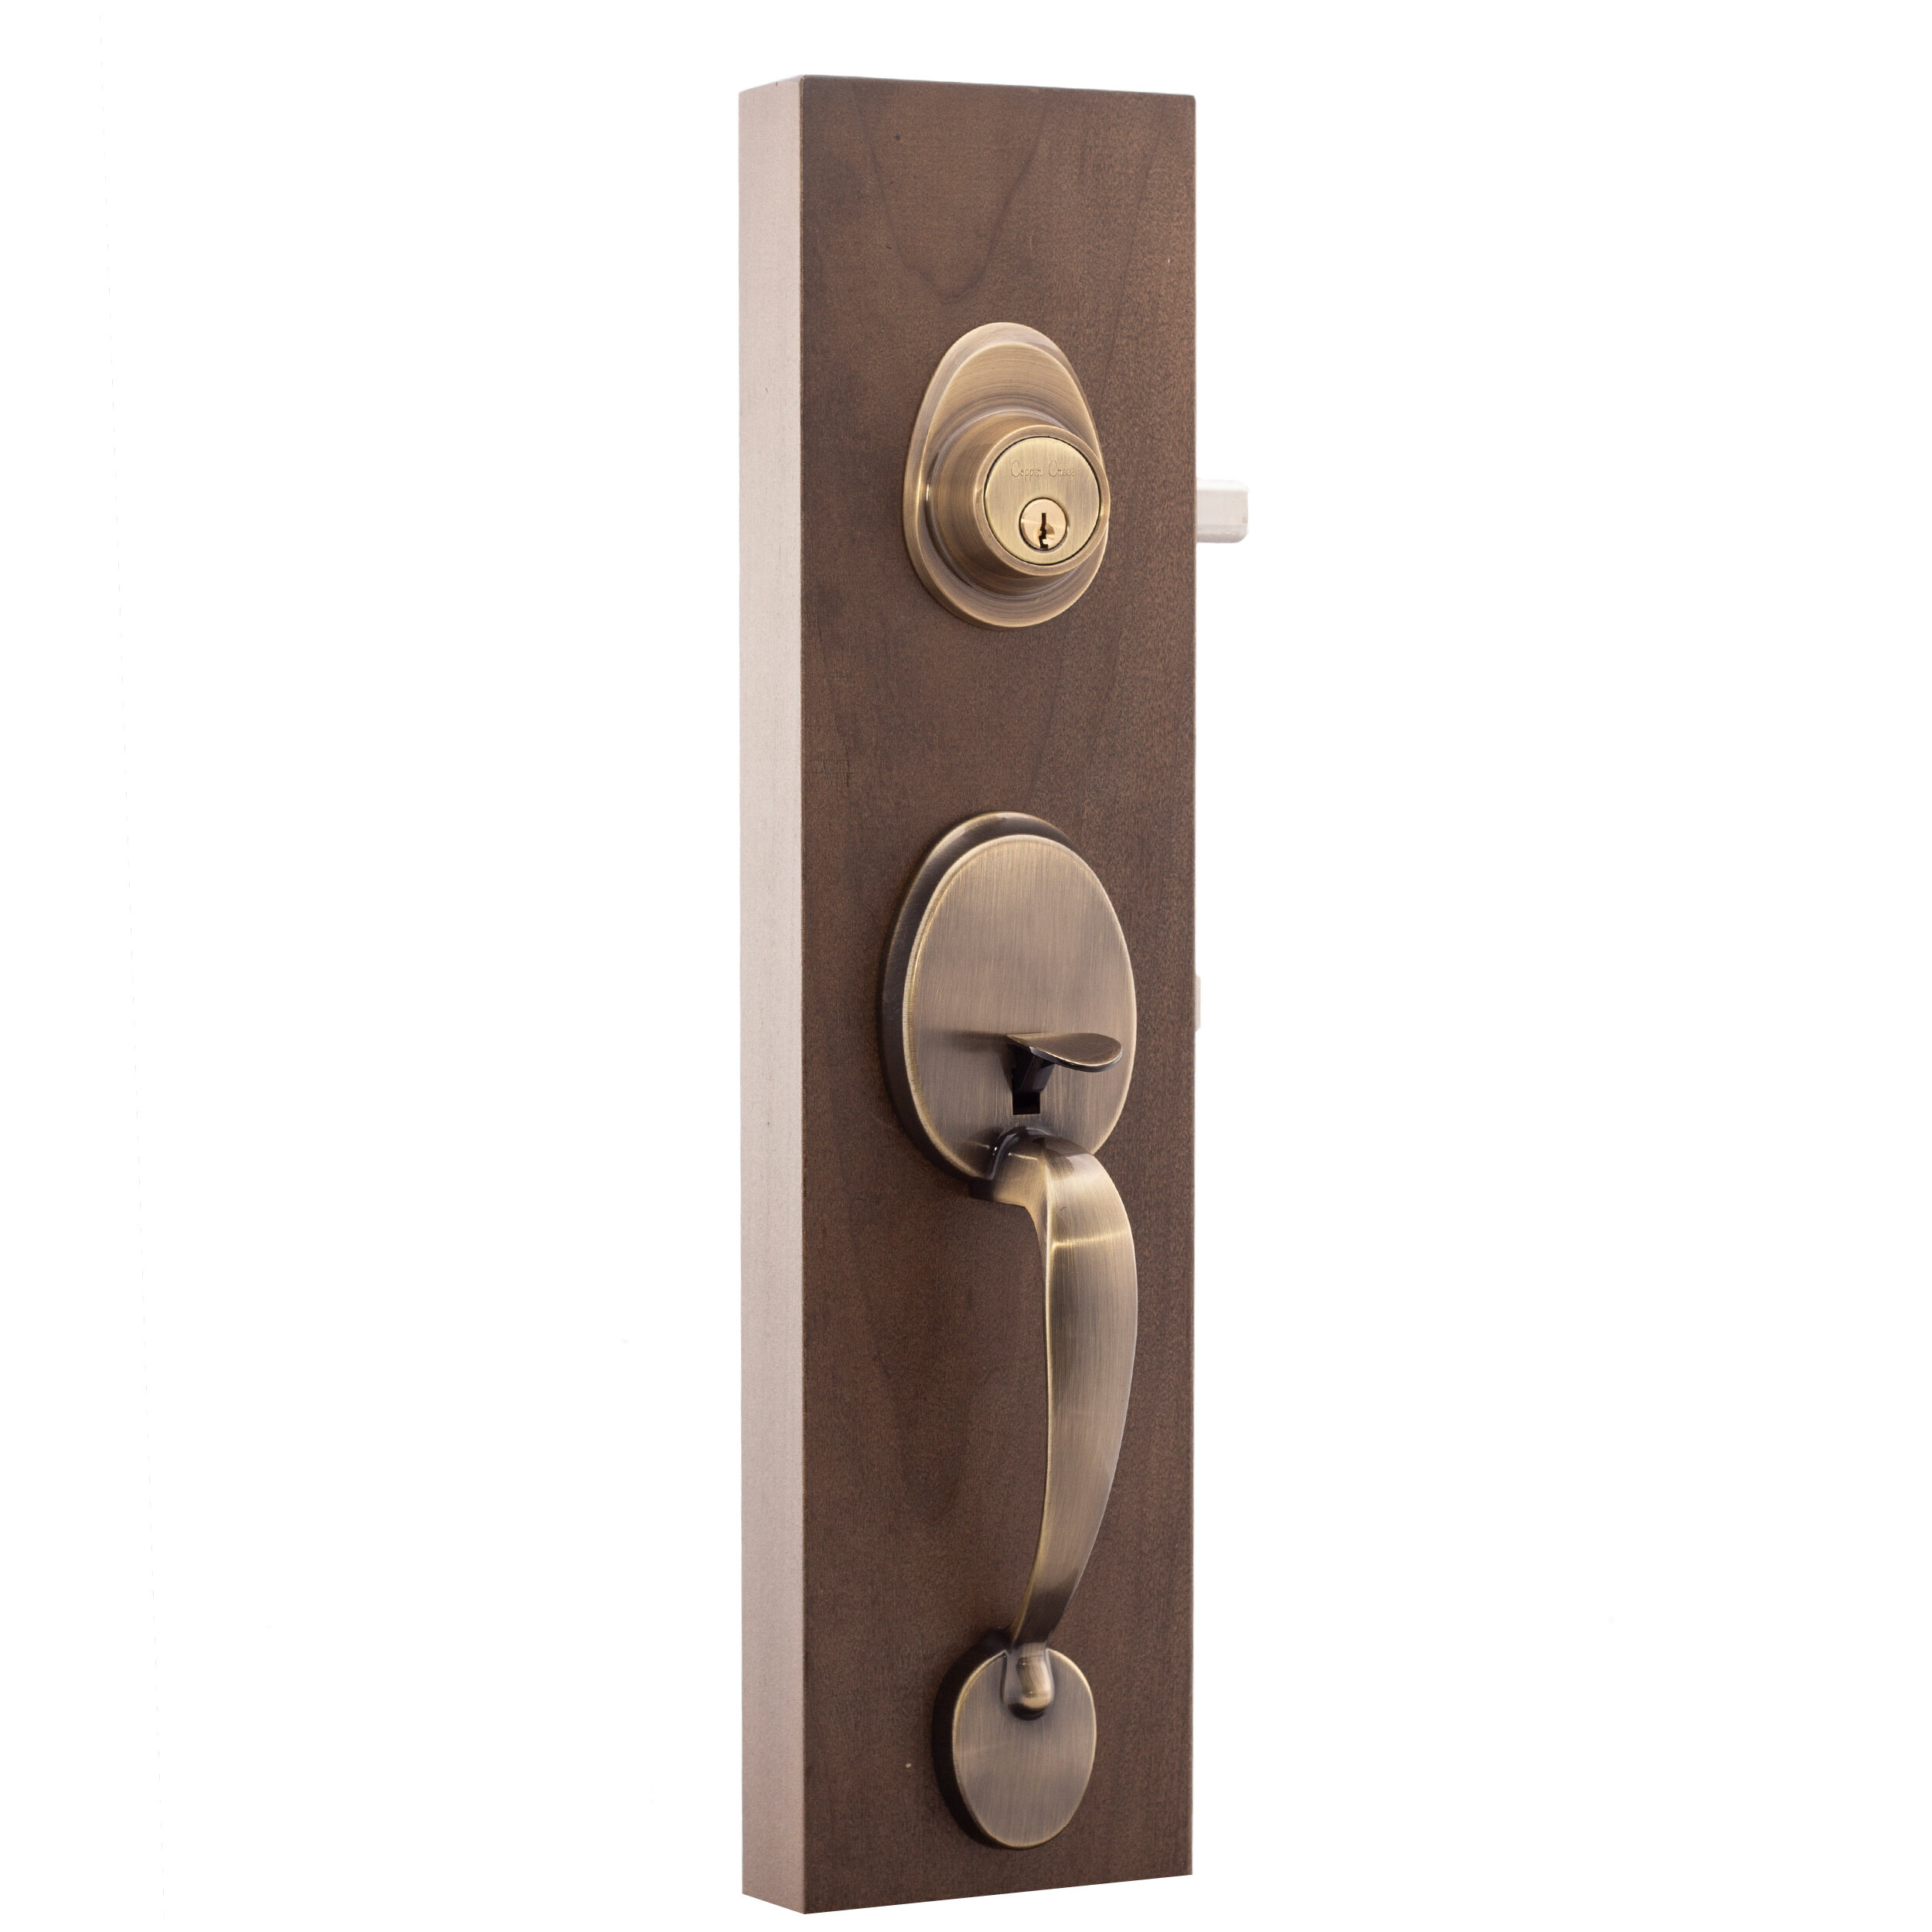 Lockset Reversal Front Single Door Hardware Set Lama, Grip Entry Door Lock Set with Lever Handle and Deadbolt, Vintage Antique Copper, Bronze